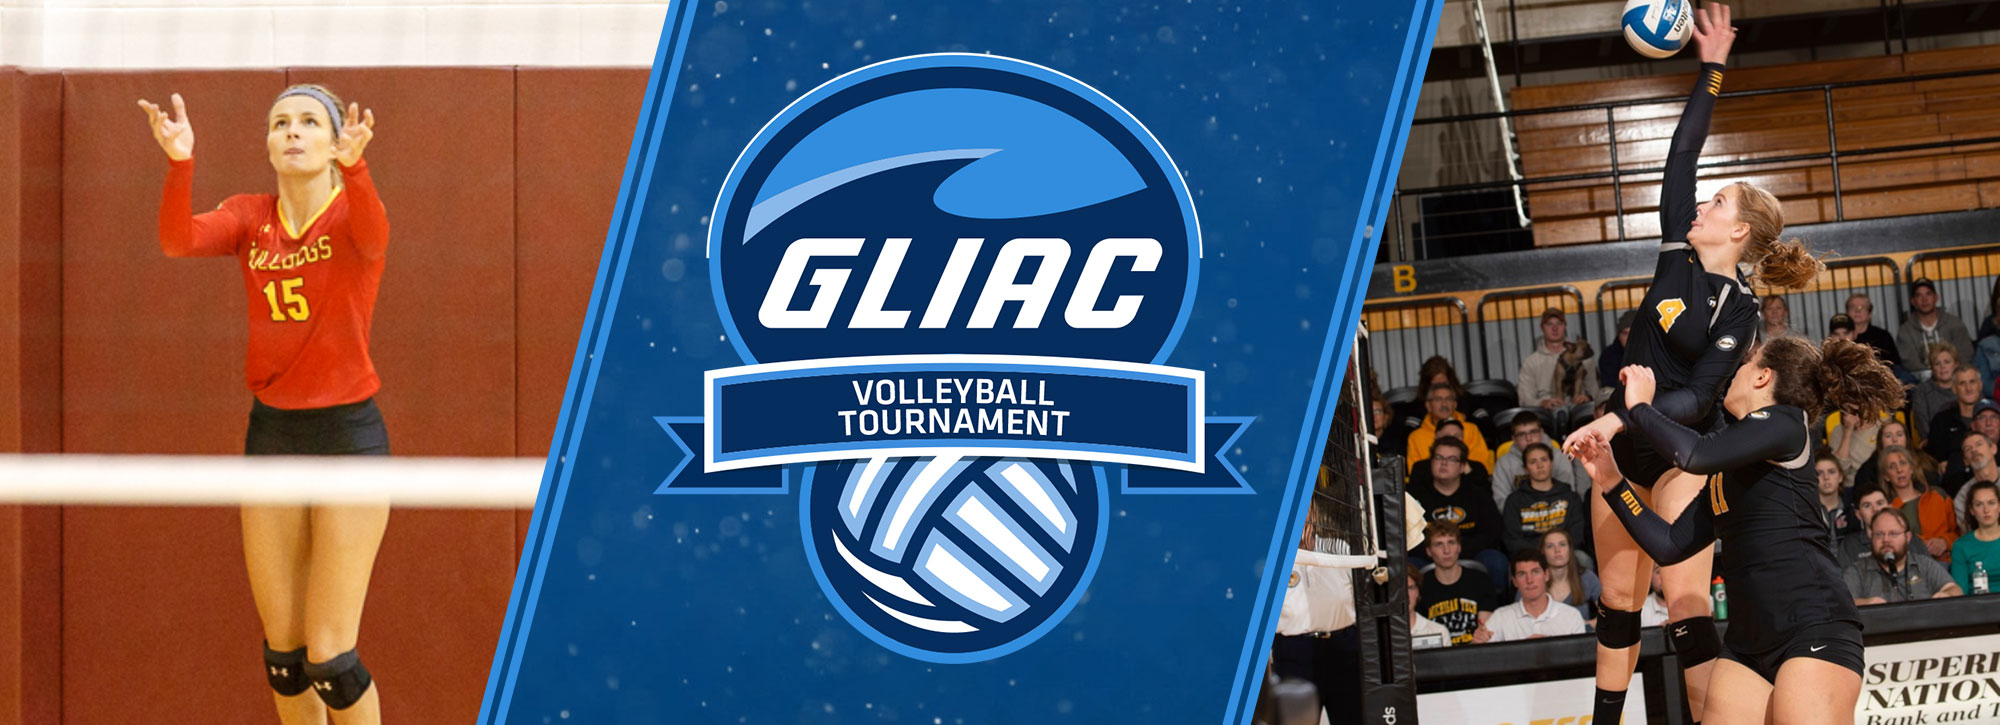 Field Set for 2018 GLIAC Volleyball Tournament; Quarters Start Wednesday